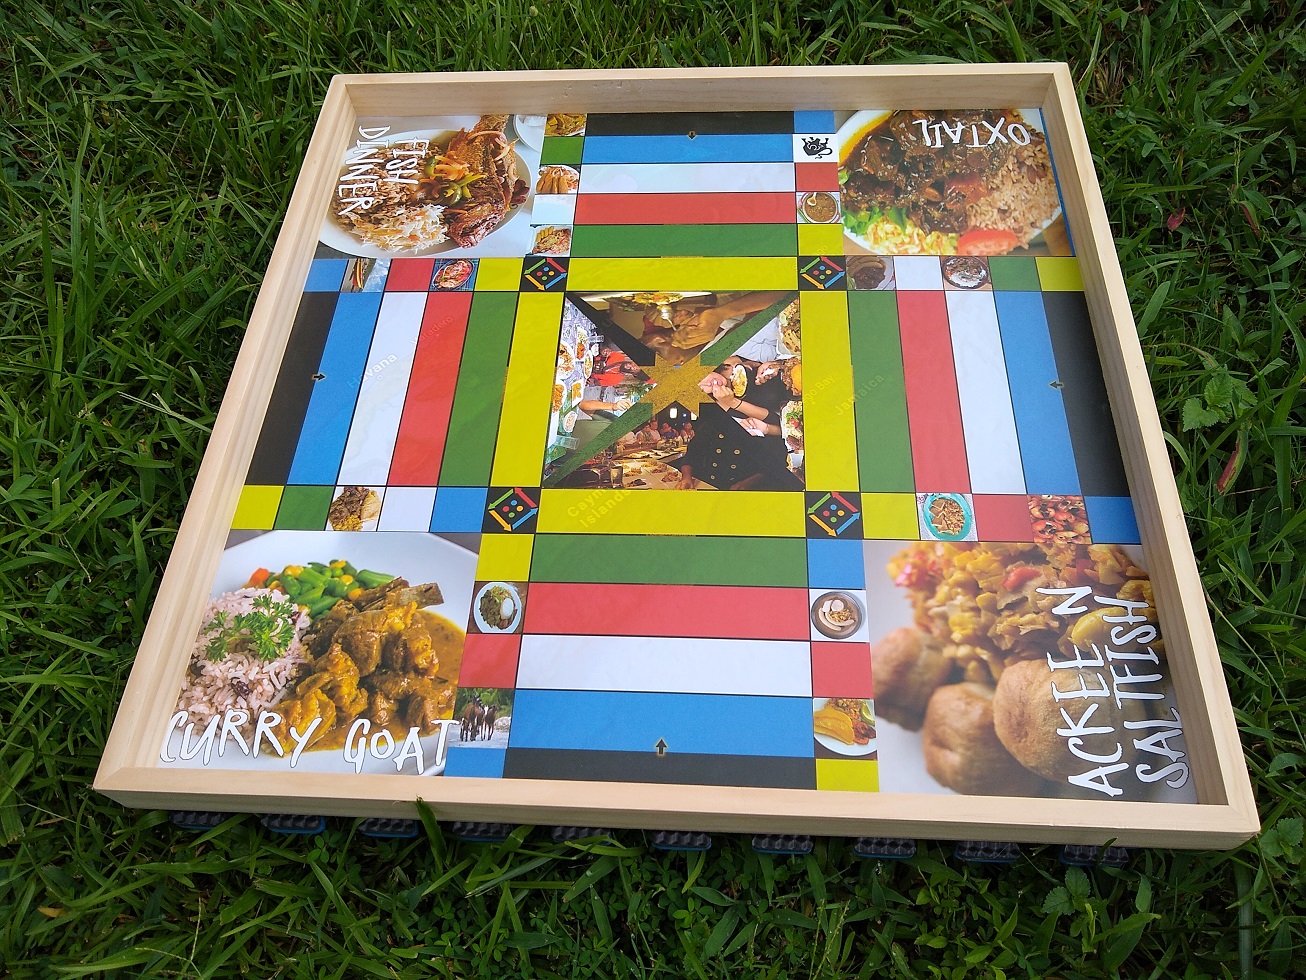 Jamaican Ludi or Ludo  #1 Jamaican Board Game